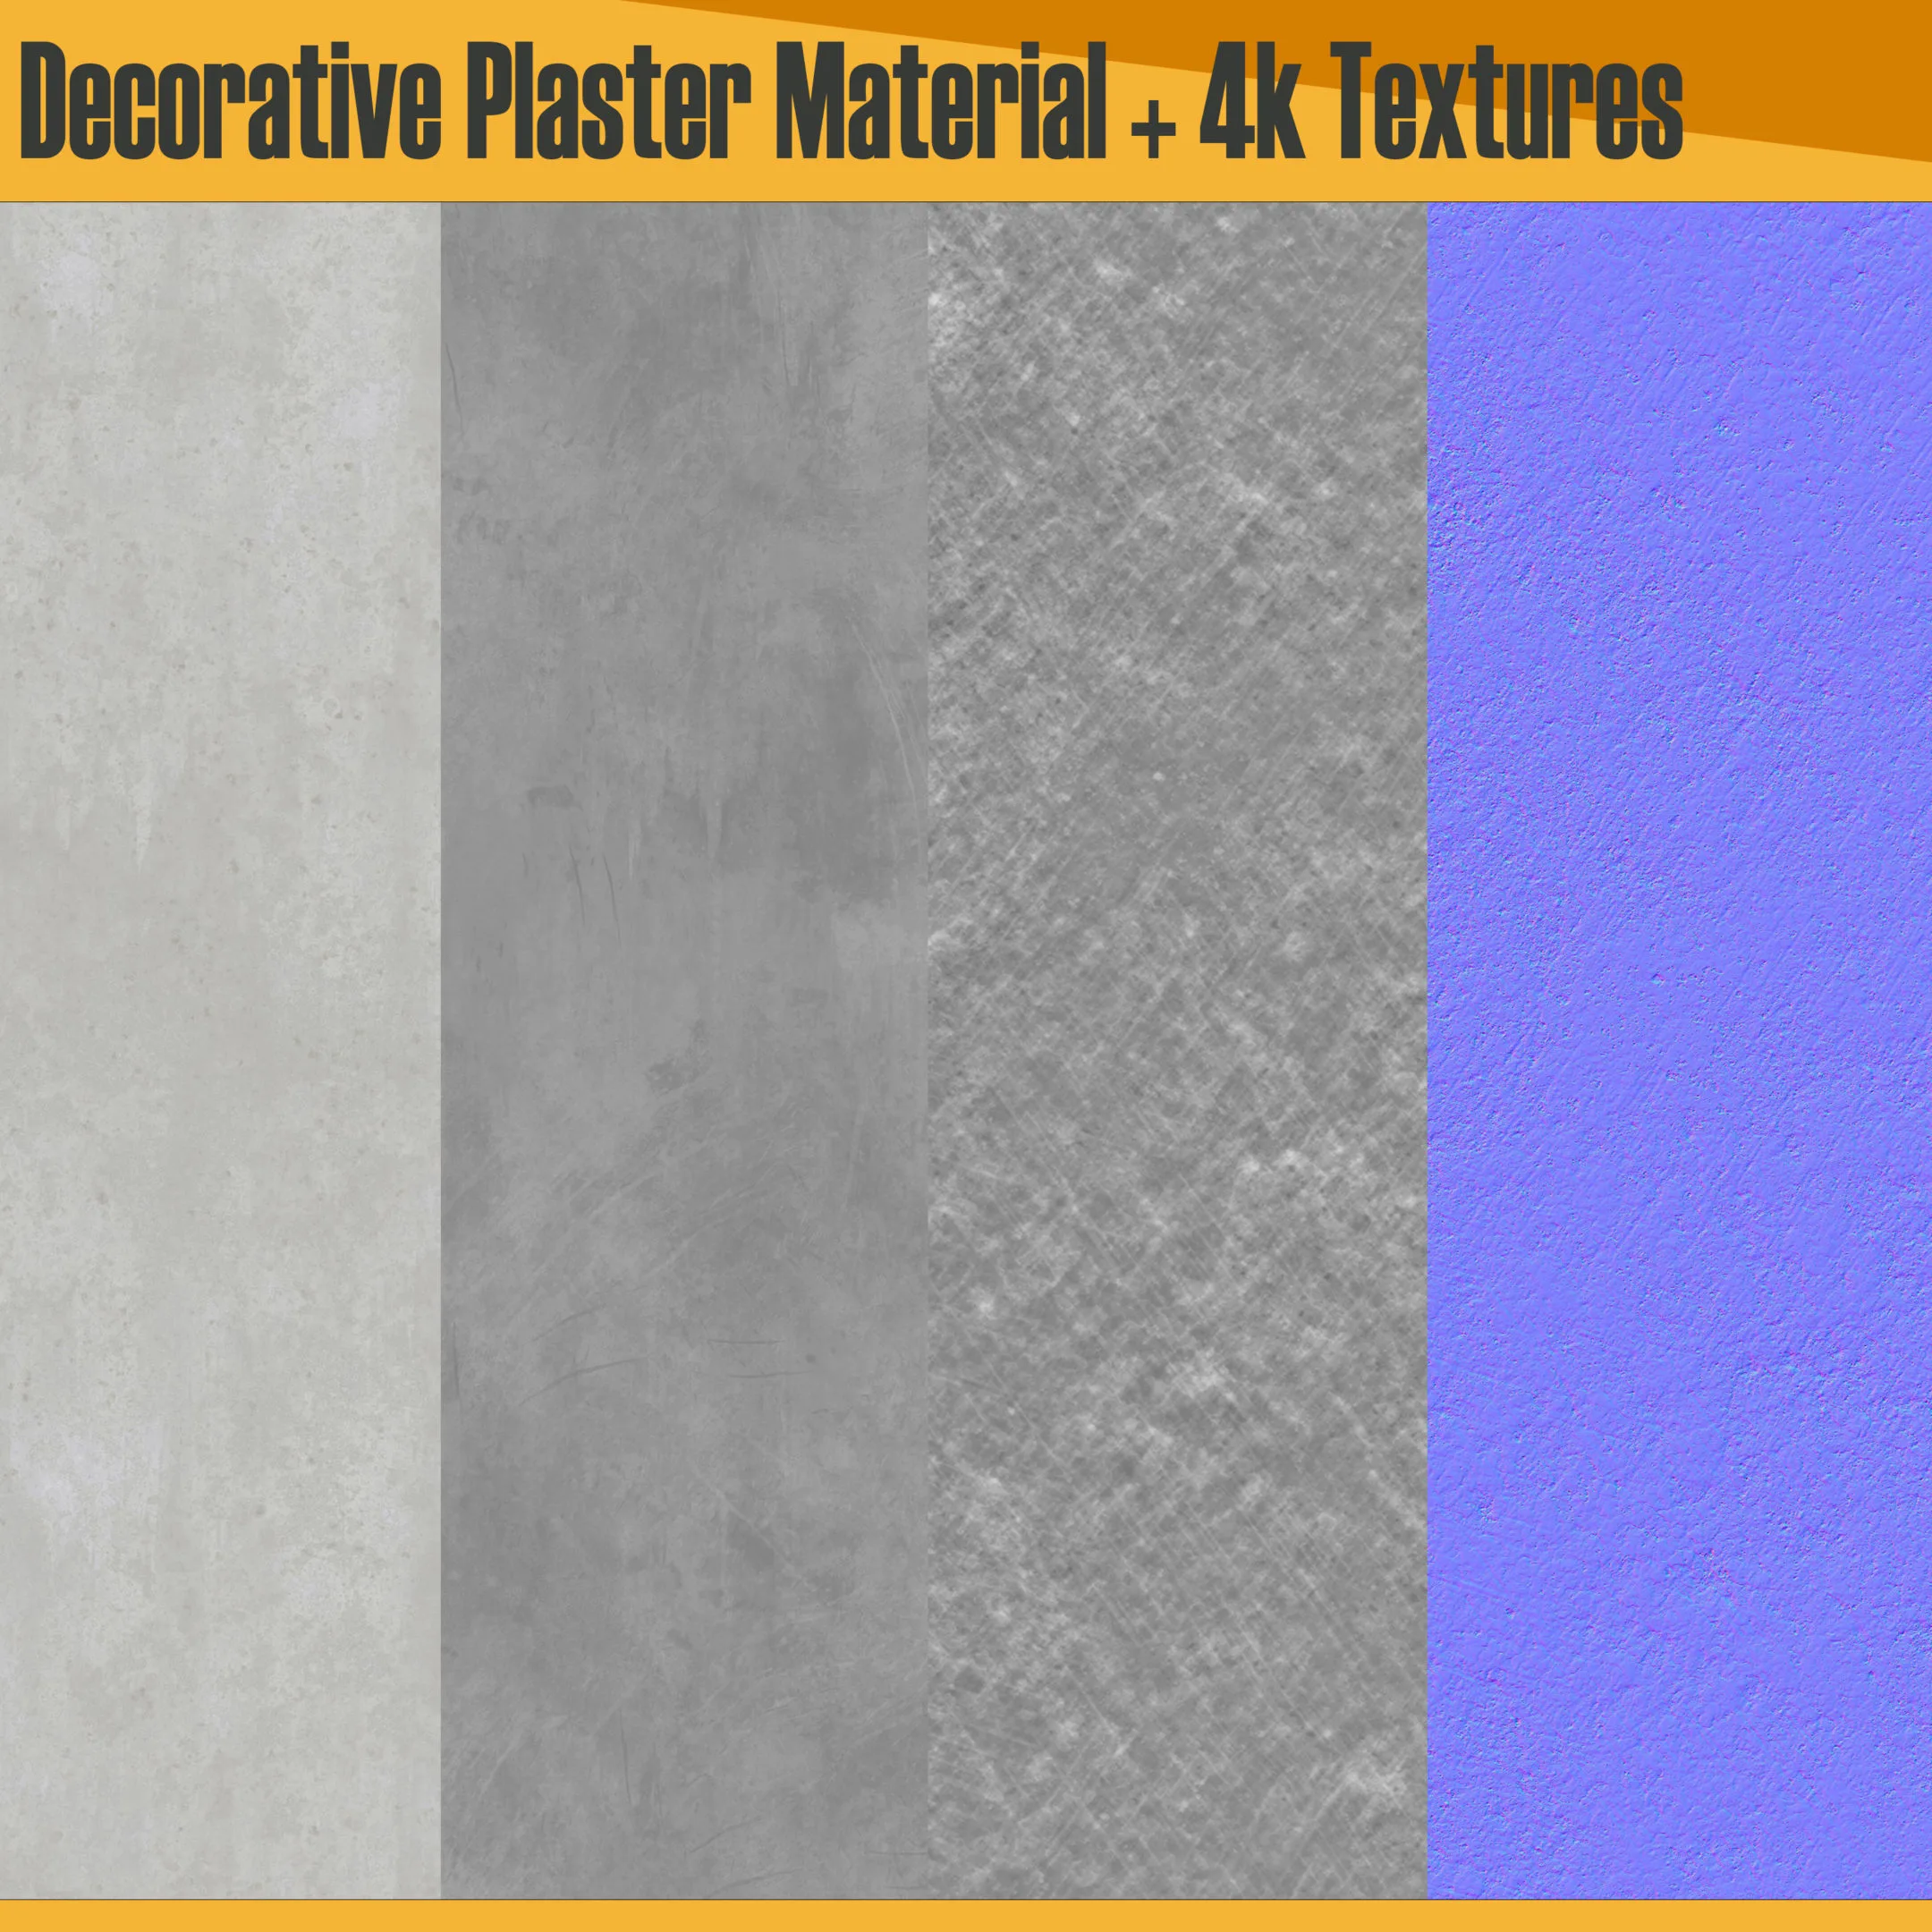 Decorative Plaster Material + 4k Textures